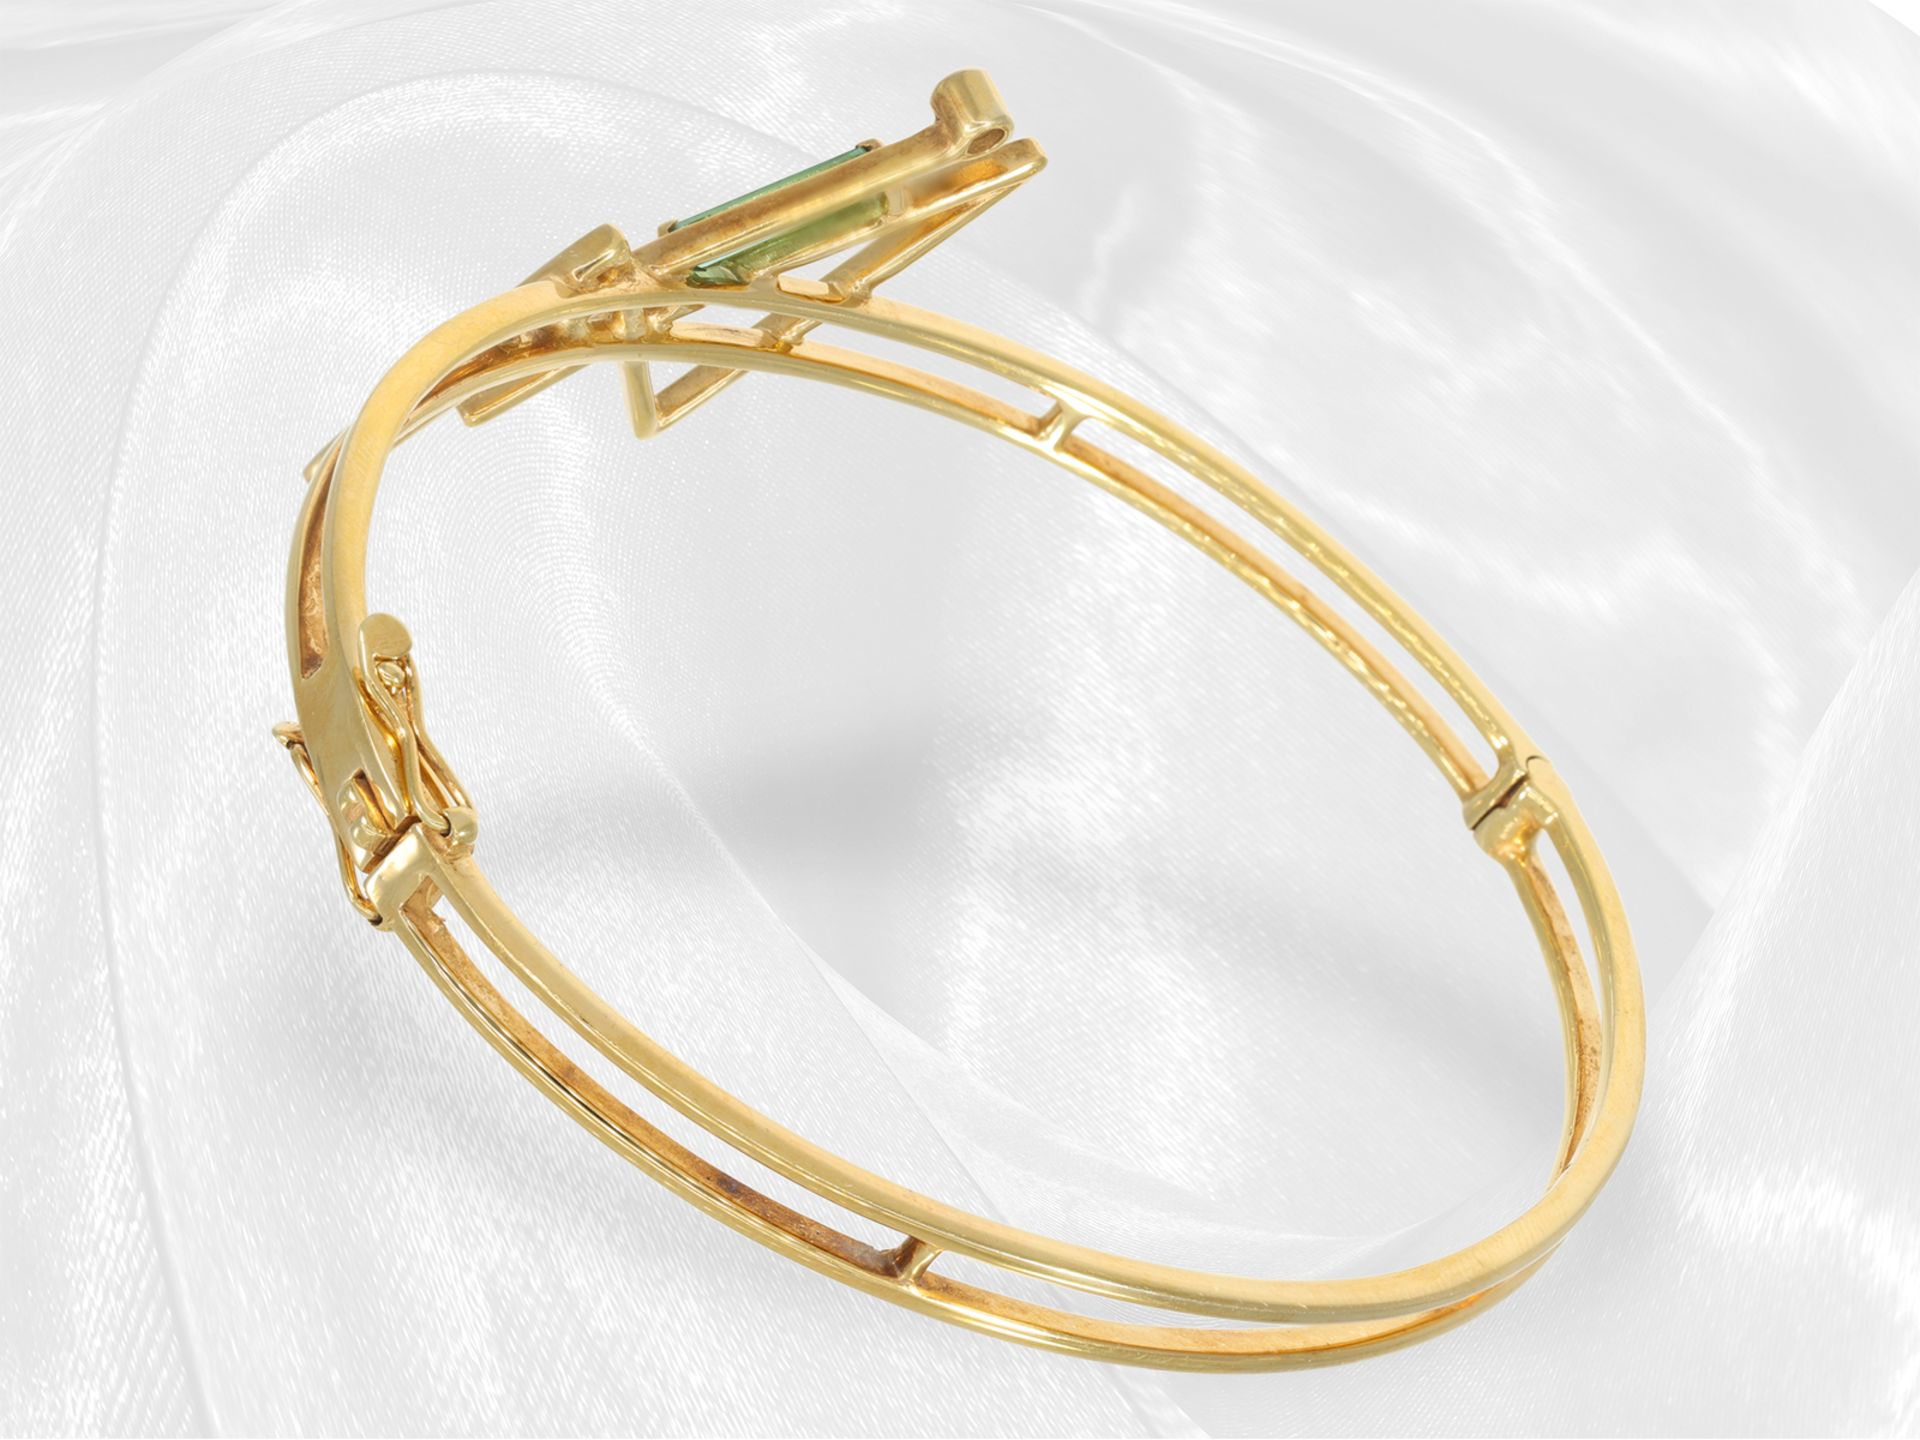 Fine handmade designer bangle in 14K yellow gold with tourmaline and small brilliant-cut diamond - Image 3 of 3